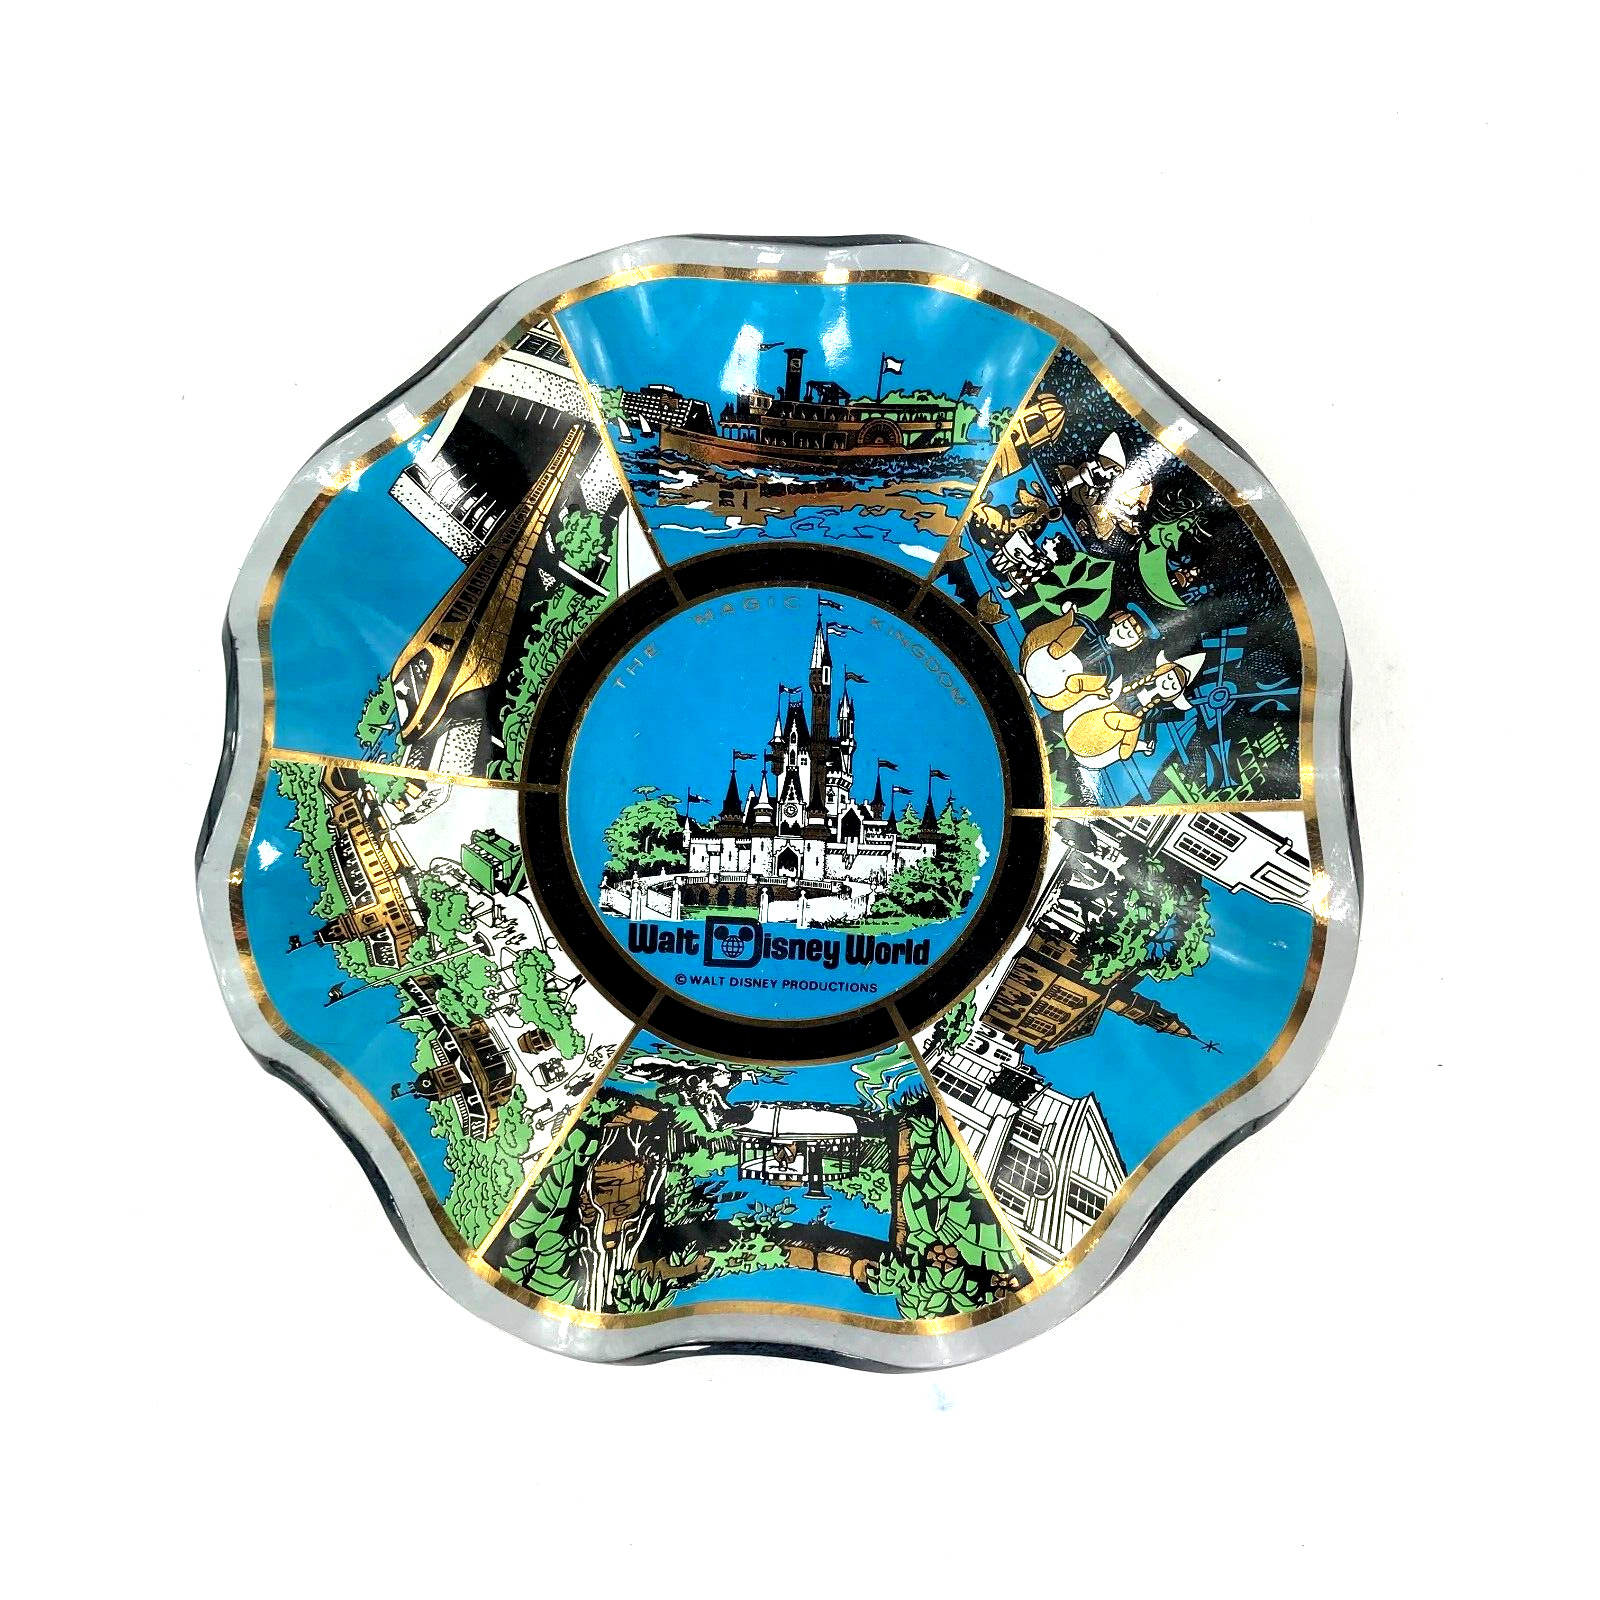 Vintage Walt Disney World 70s Glass Candy Dish Ashtray Plate Bowl Magic Kingdom